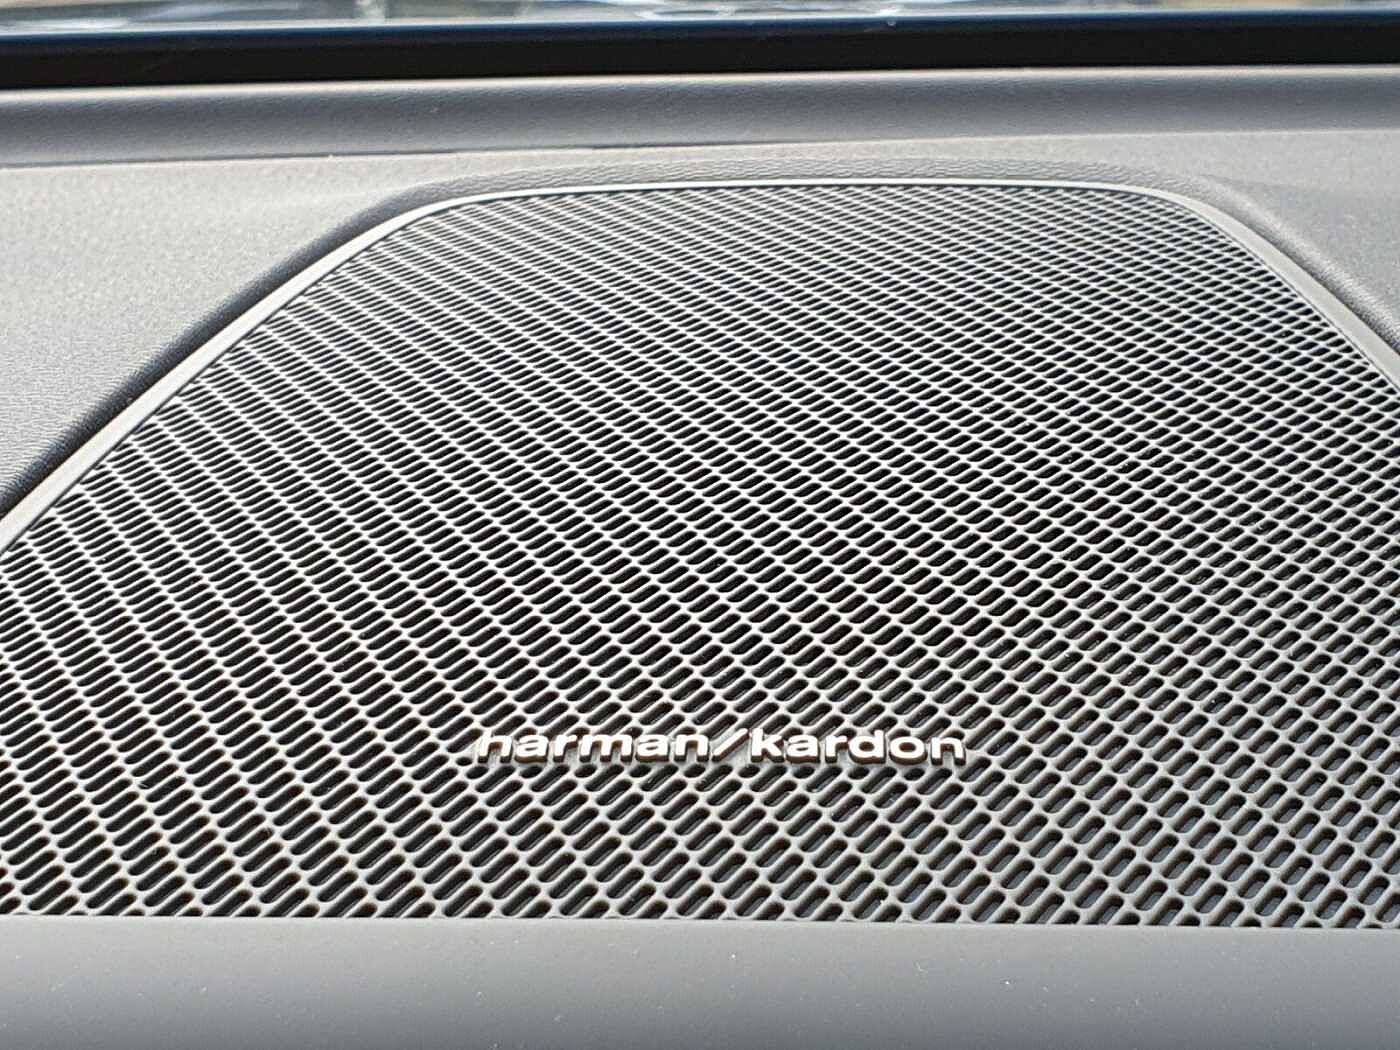 Ladekantenschutz Volvo XC90 II Edelstahl Hochglanz - Carbon